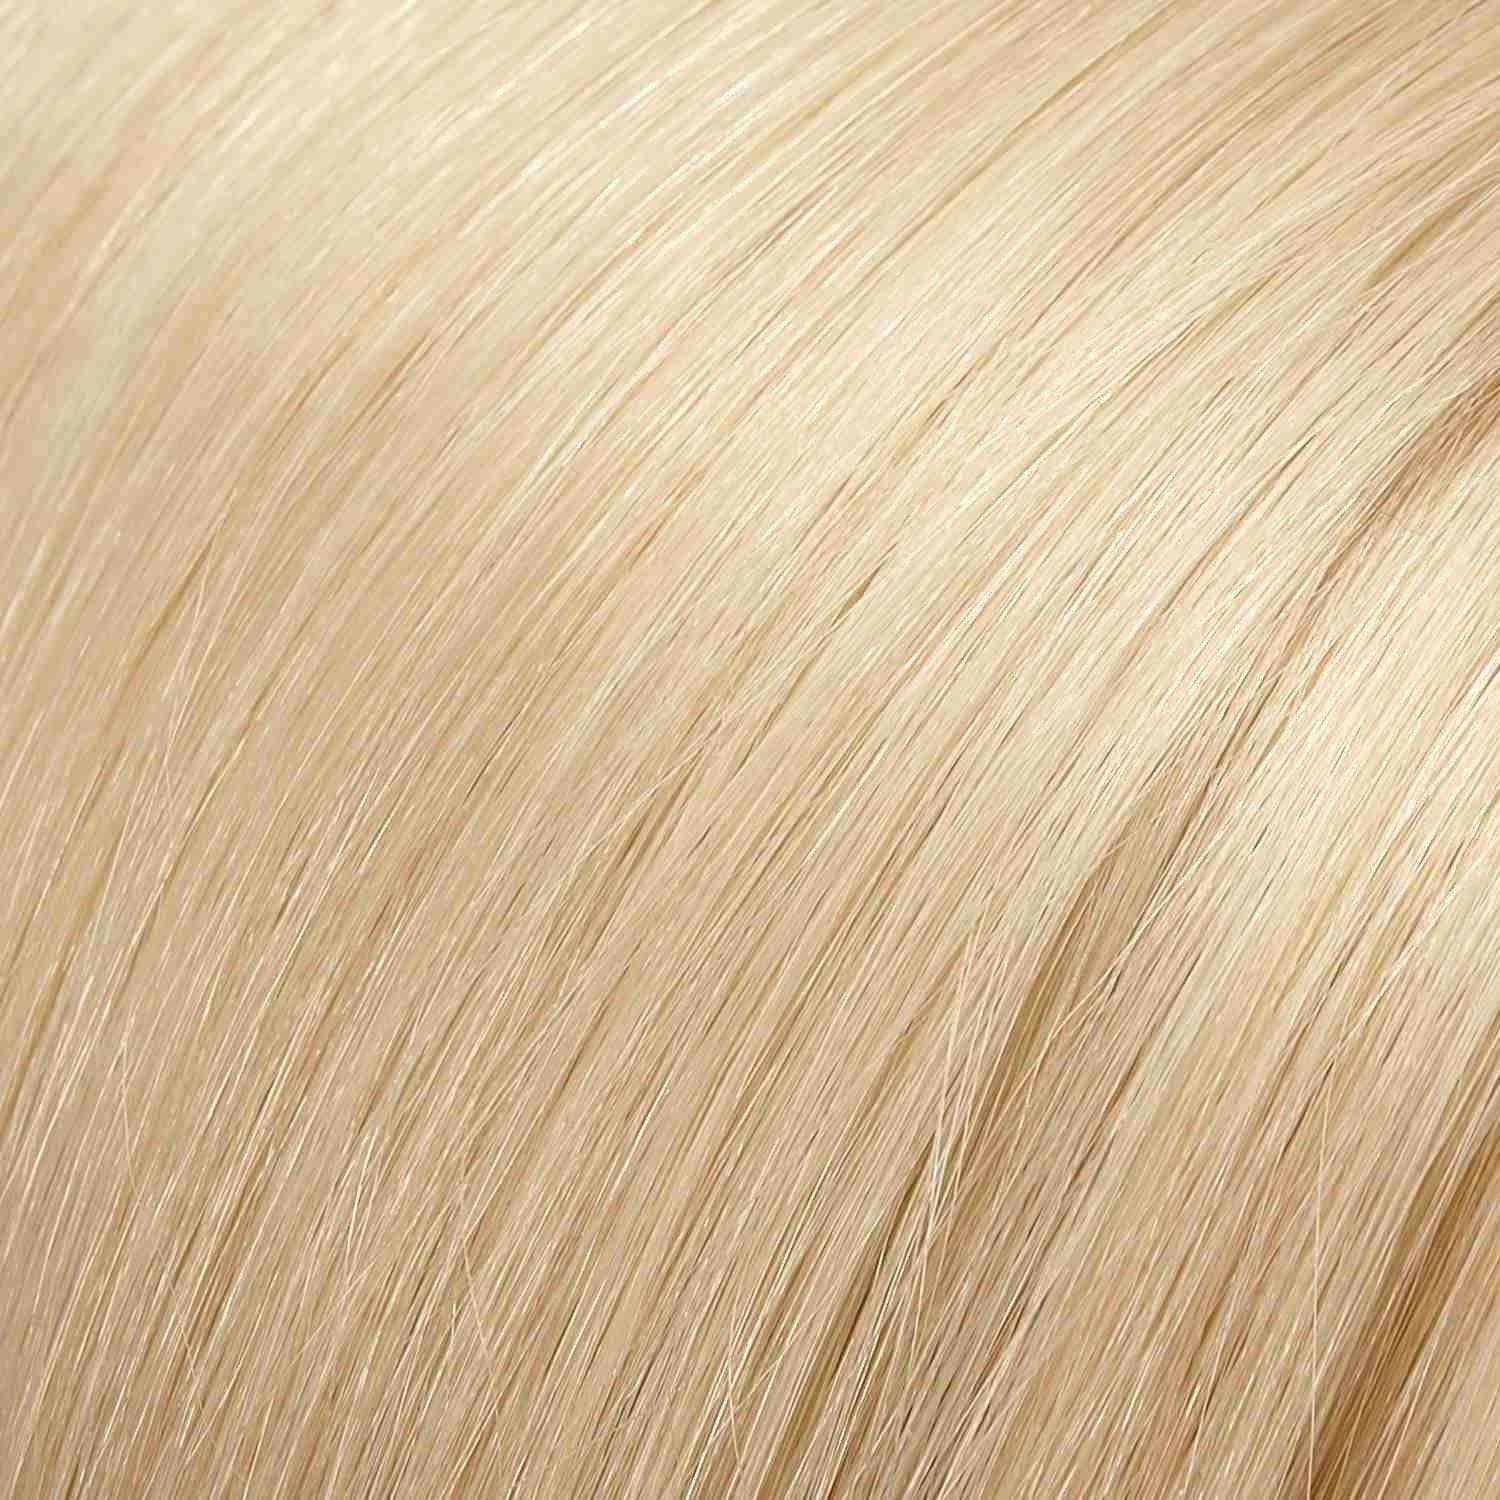 easiPony 20" by Jon Renau | 100% Human Hair Extension (Clip In)